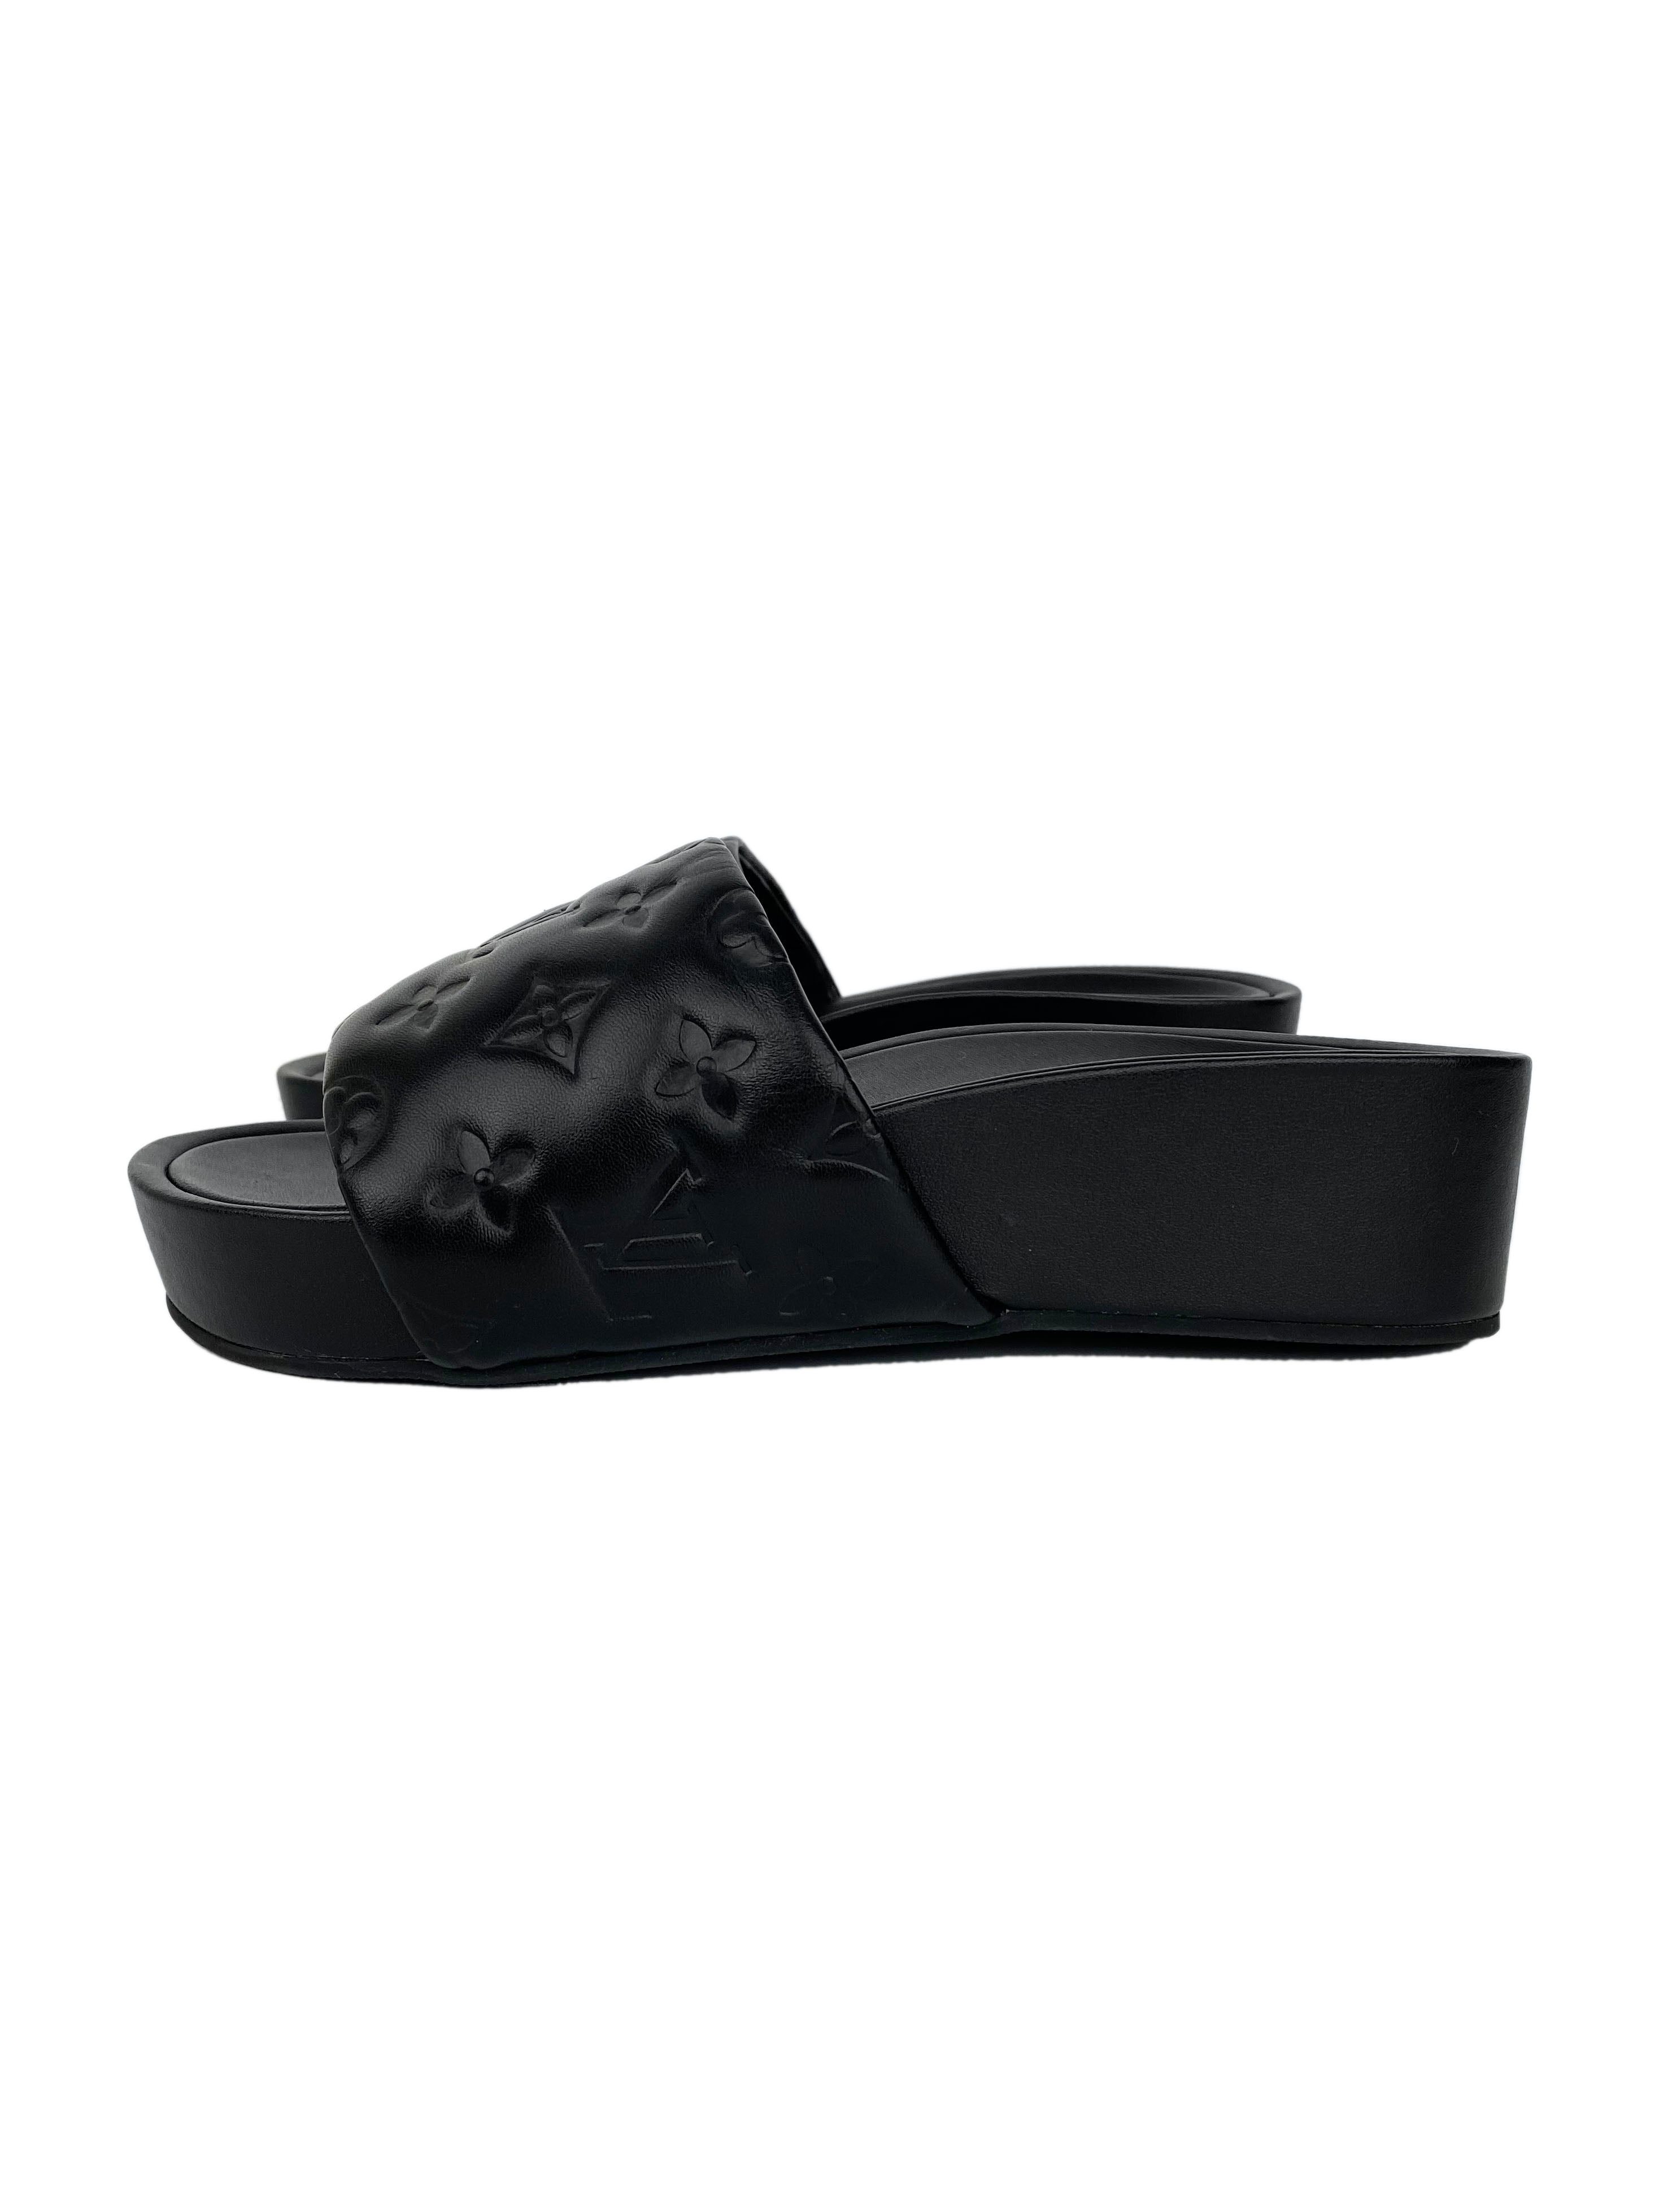 Louis Vuitton Black Platform Slides 39